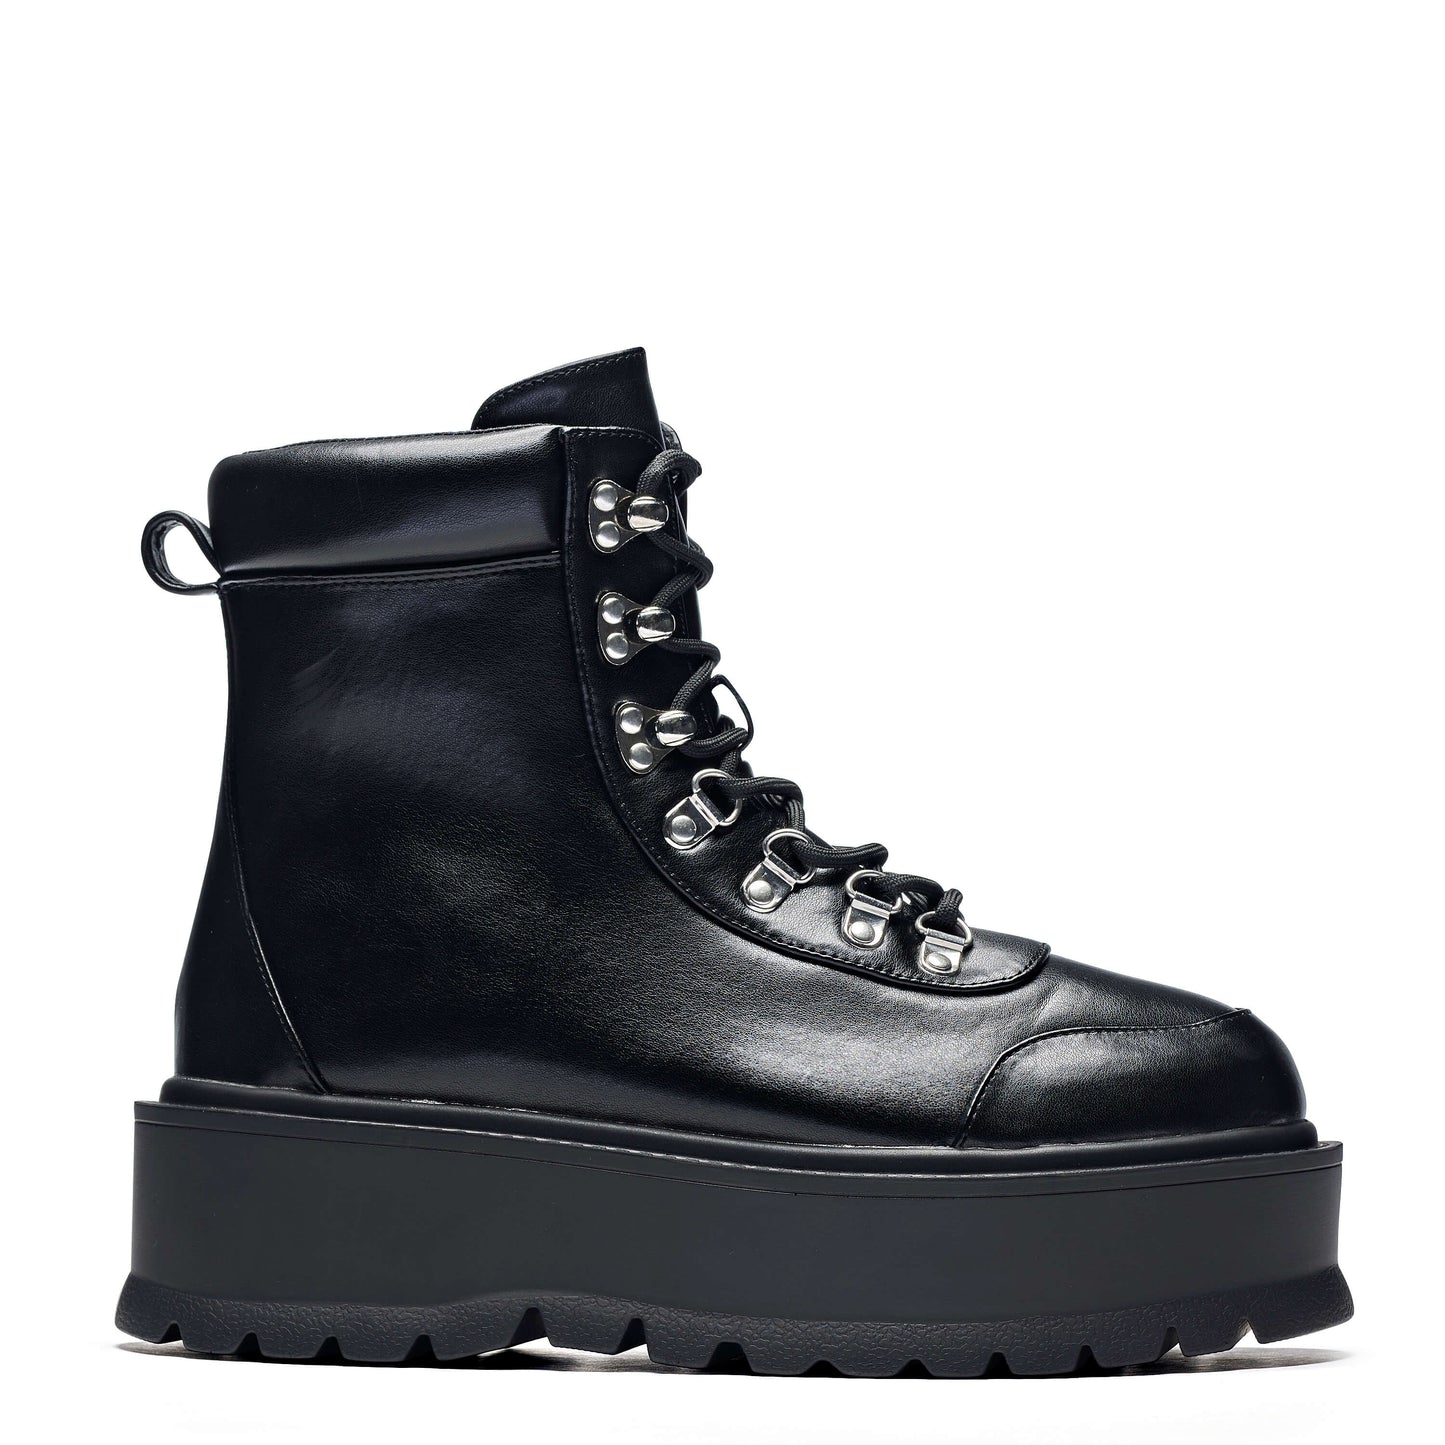 HYDRA All Black Matrix Platform Boots - Ankle Boots - KOI Footwear - Black - Side View